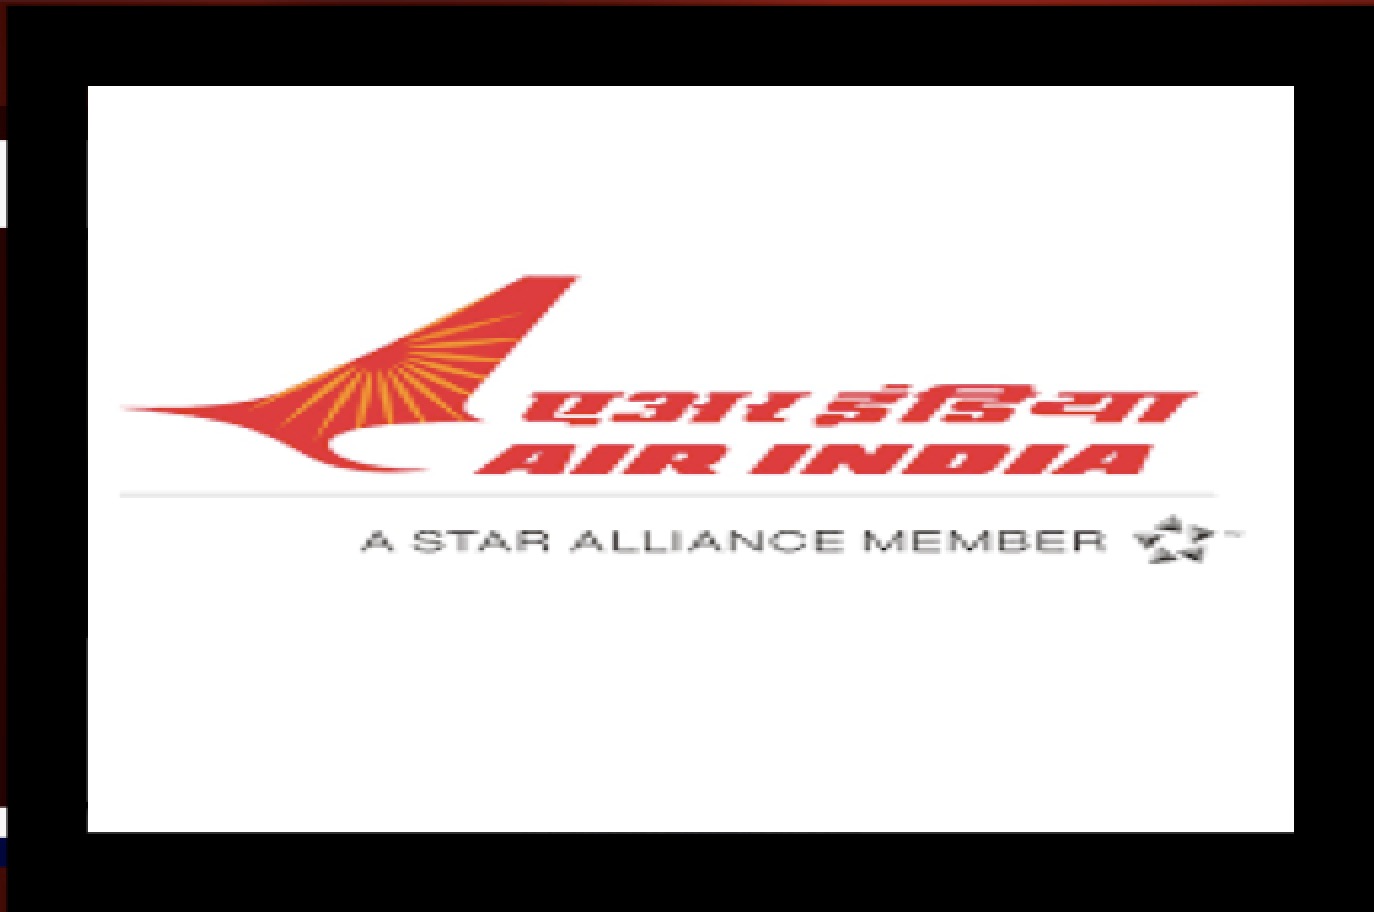 COVID-19 positive Air India pilots, found negative in retest